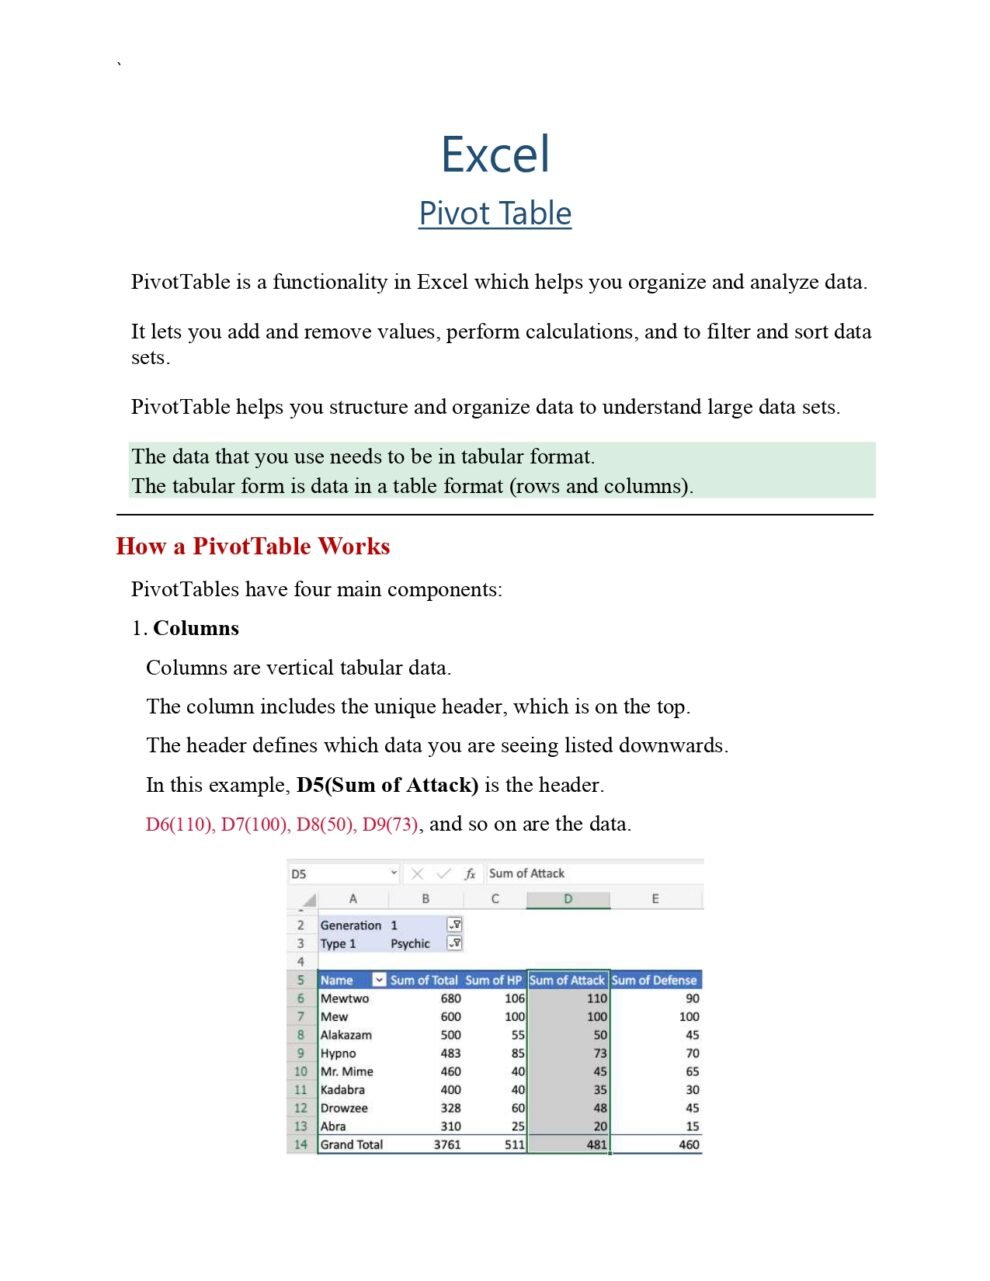 Excel Pivot Table: A Pdf Guide